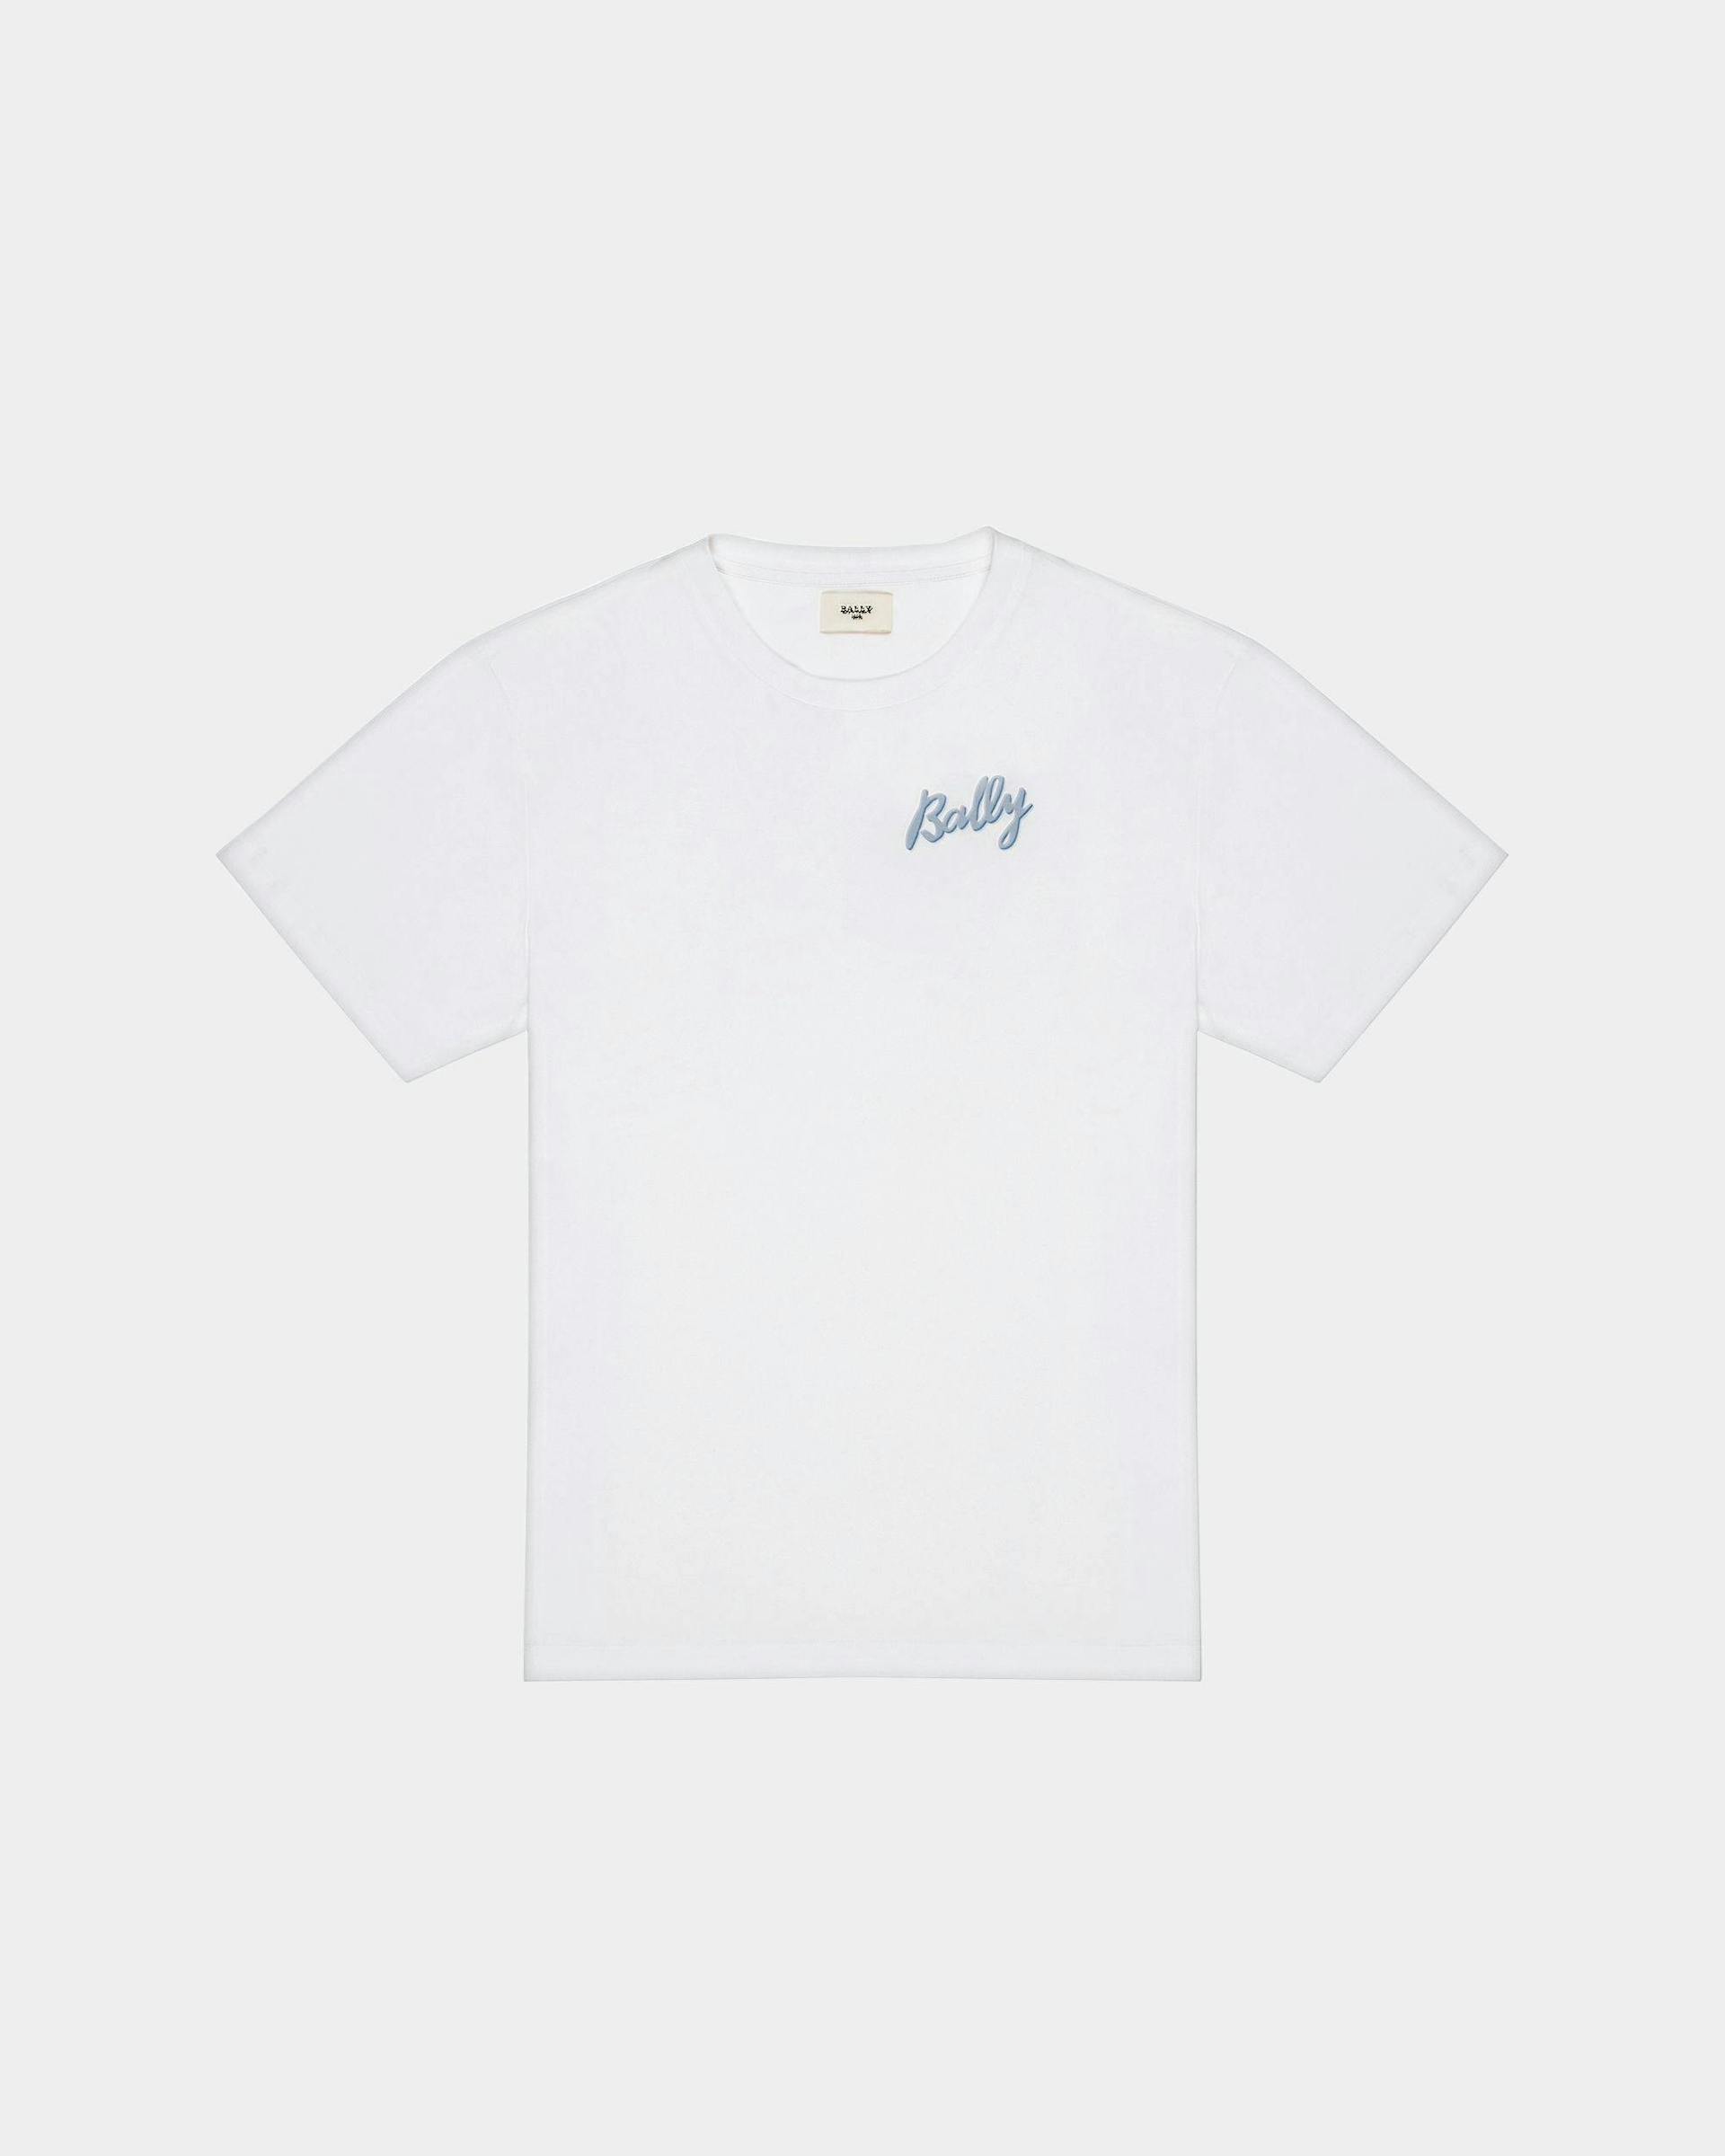 T-Shirt En Coton Blanc Et Bleu Clair - Homme - Bally - 01